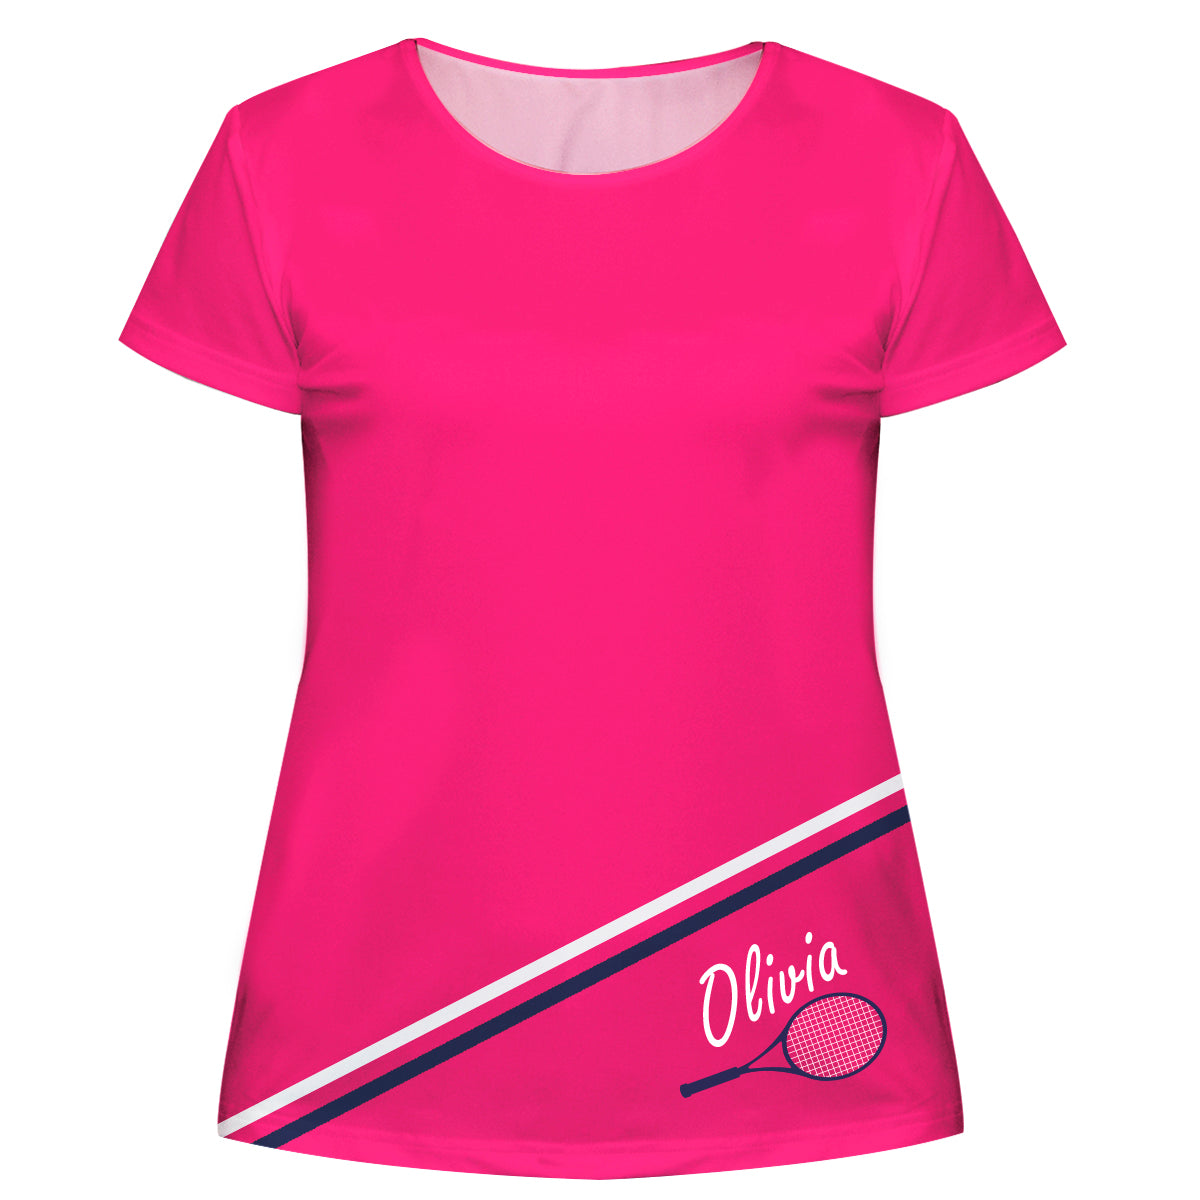 Tennis Name Hot Pink Short Sleeve Tee Shirt - Wimziy&Co.